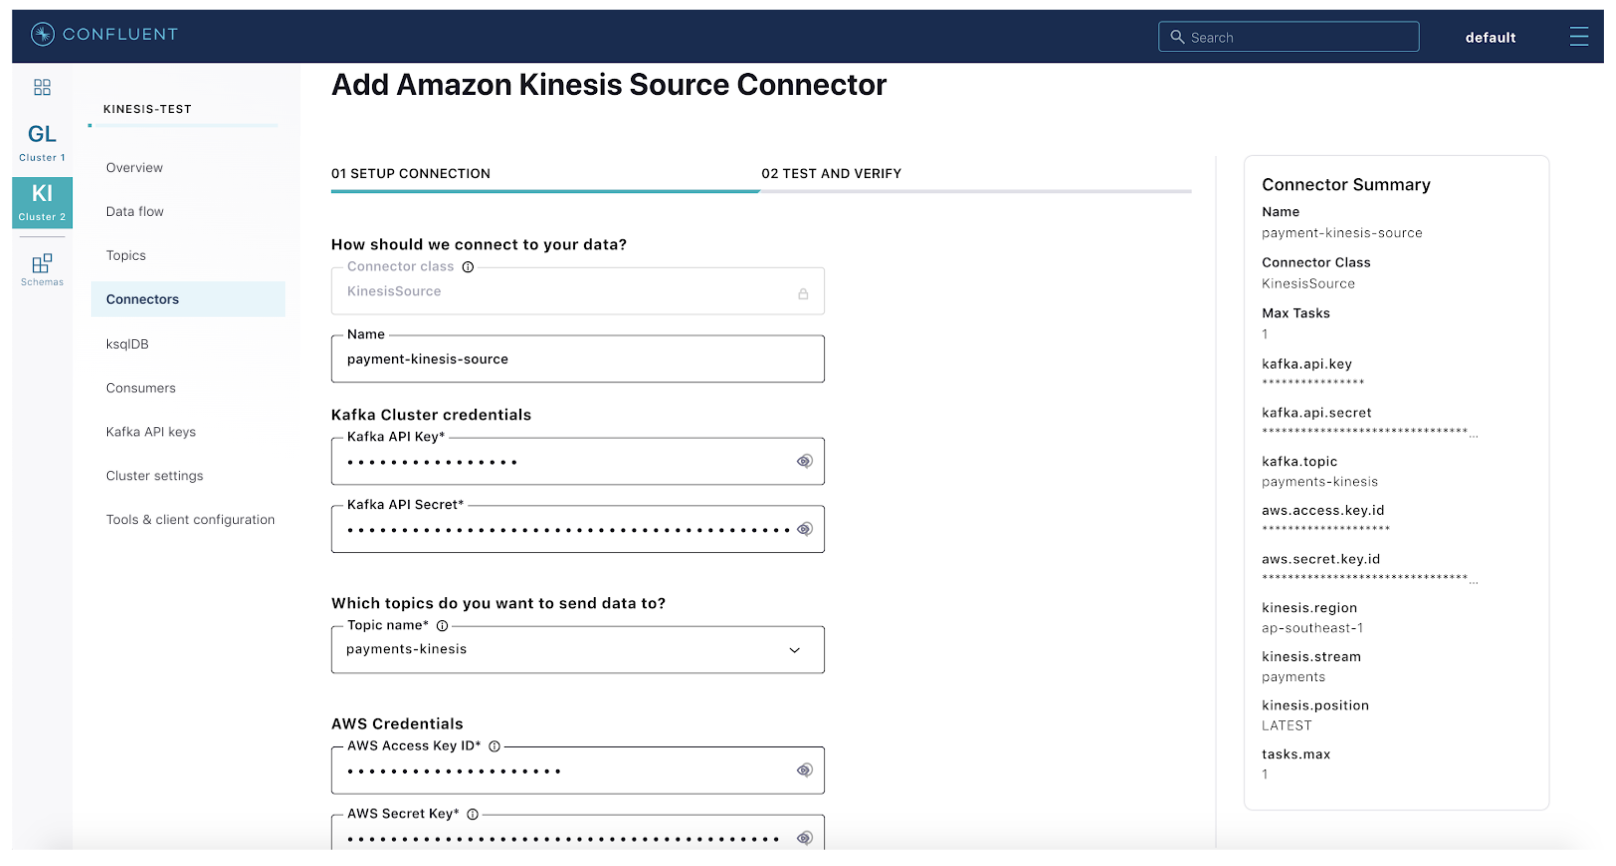 Add Amazon Kinesis Source Connector